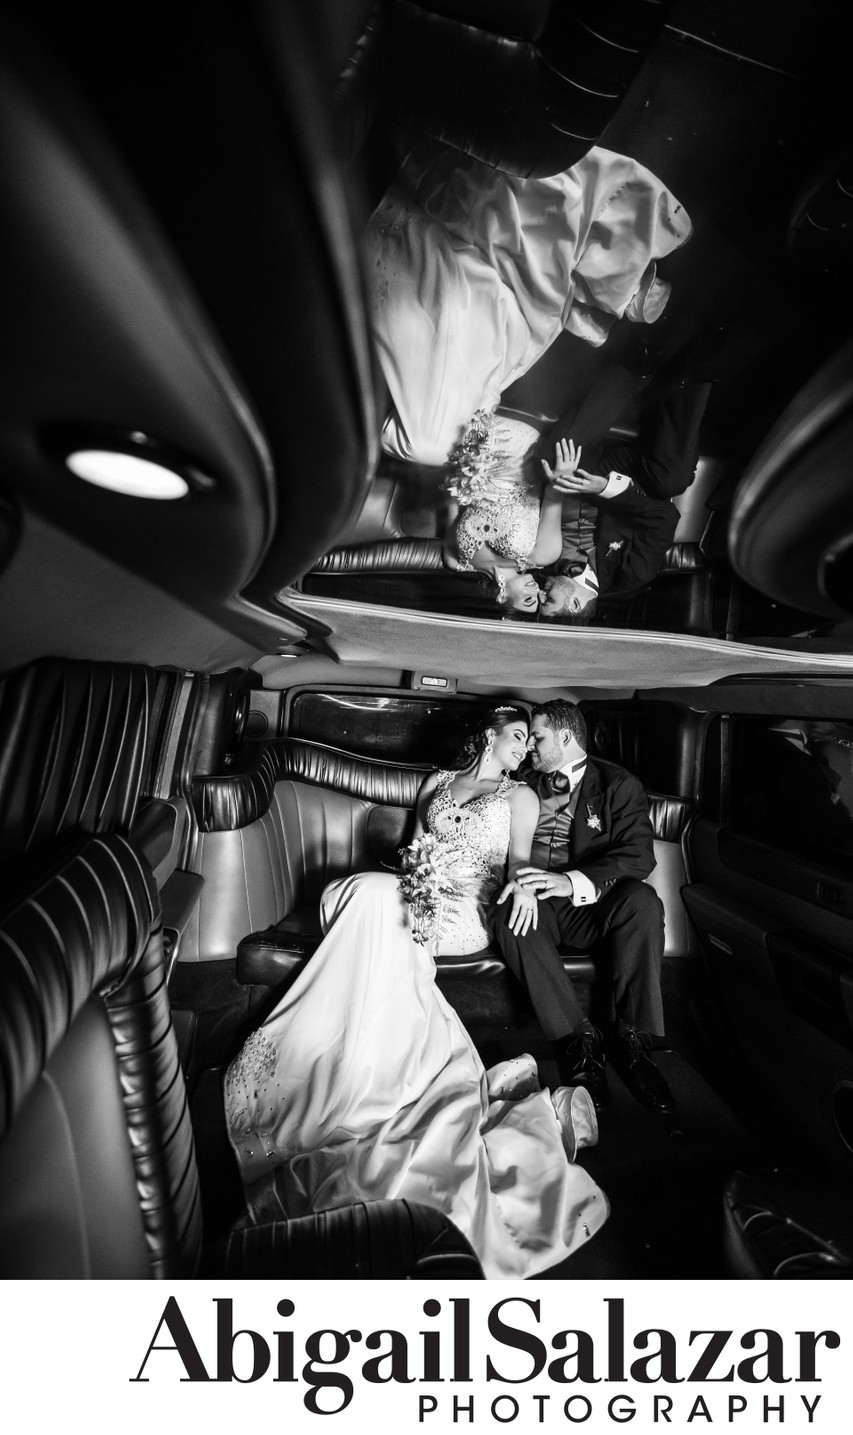 Wedding limo: Glamorous bride & groom